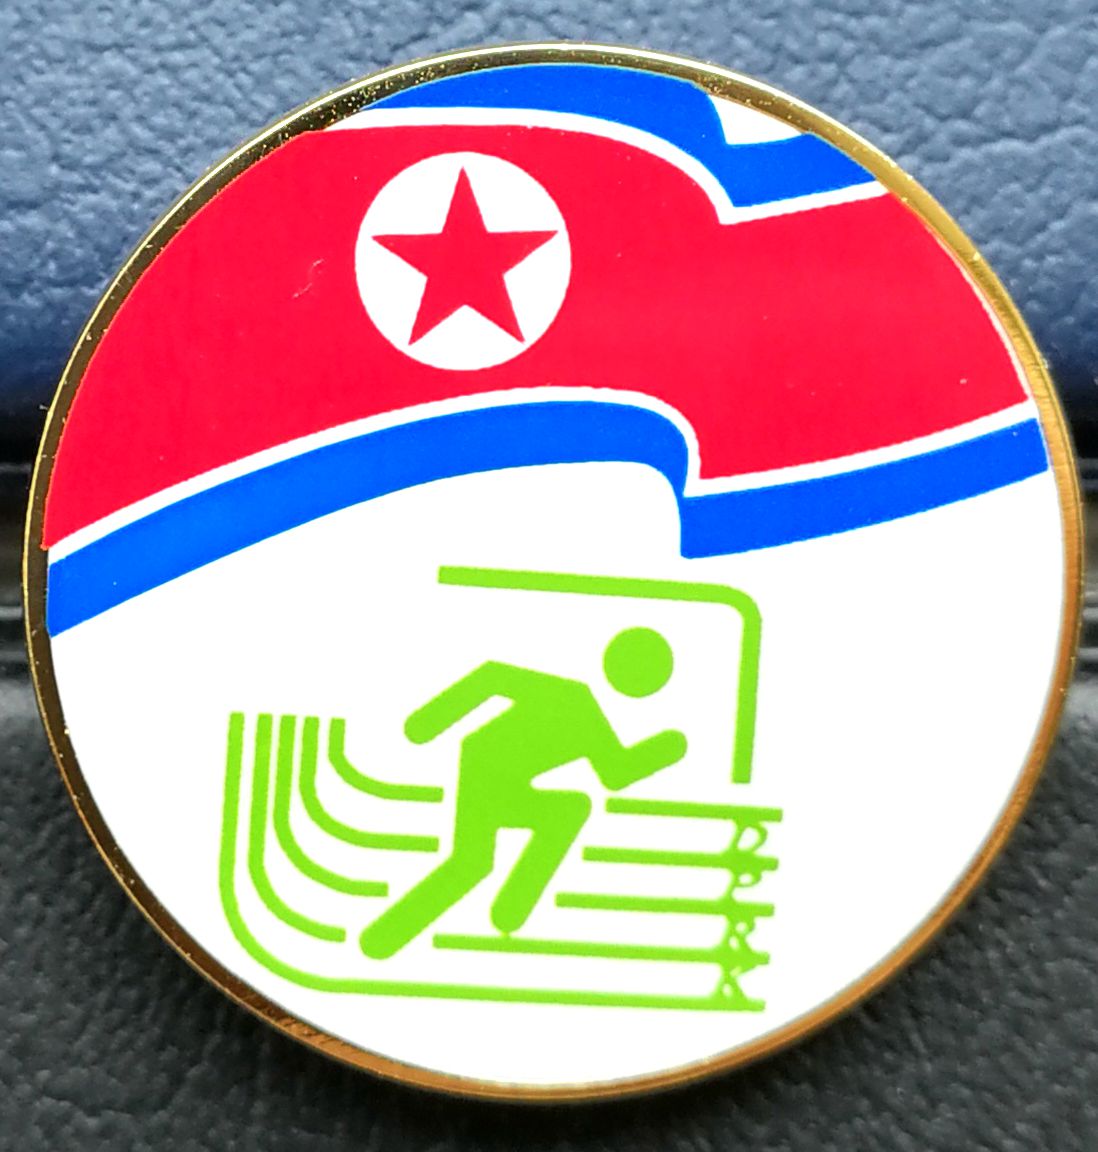 L5124, Korea 2016 Asian Game "Running" Medal Pin